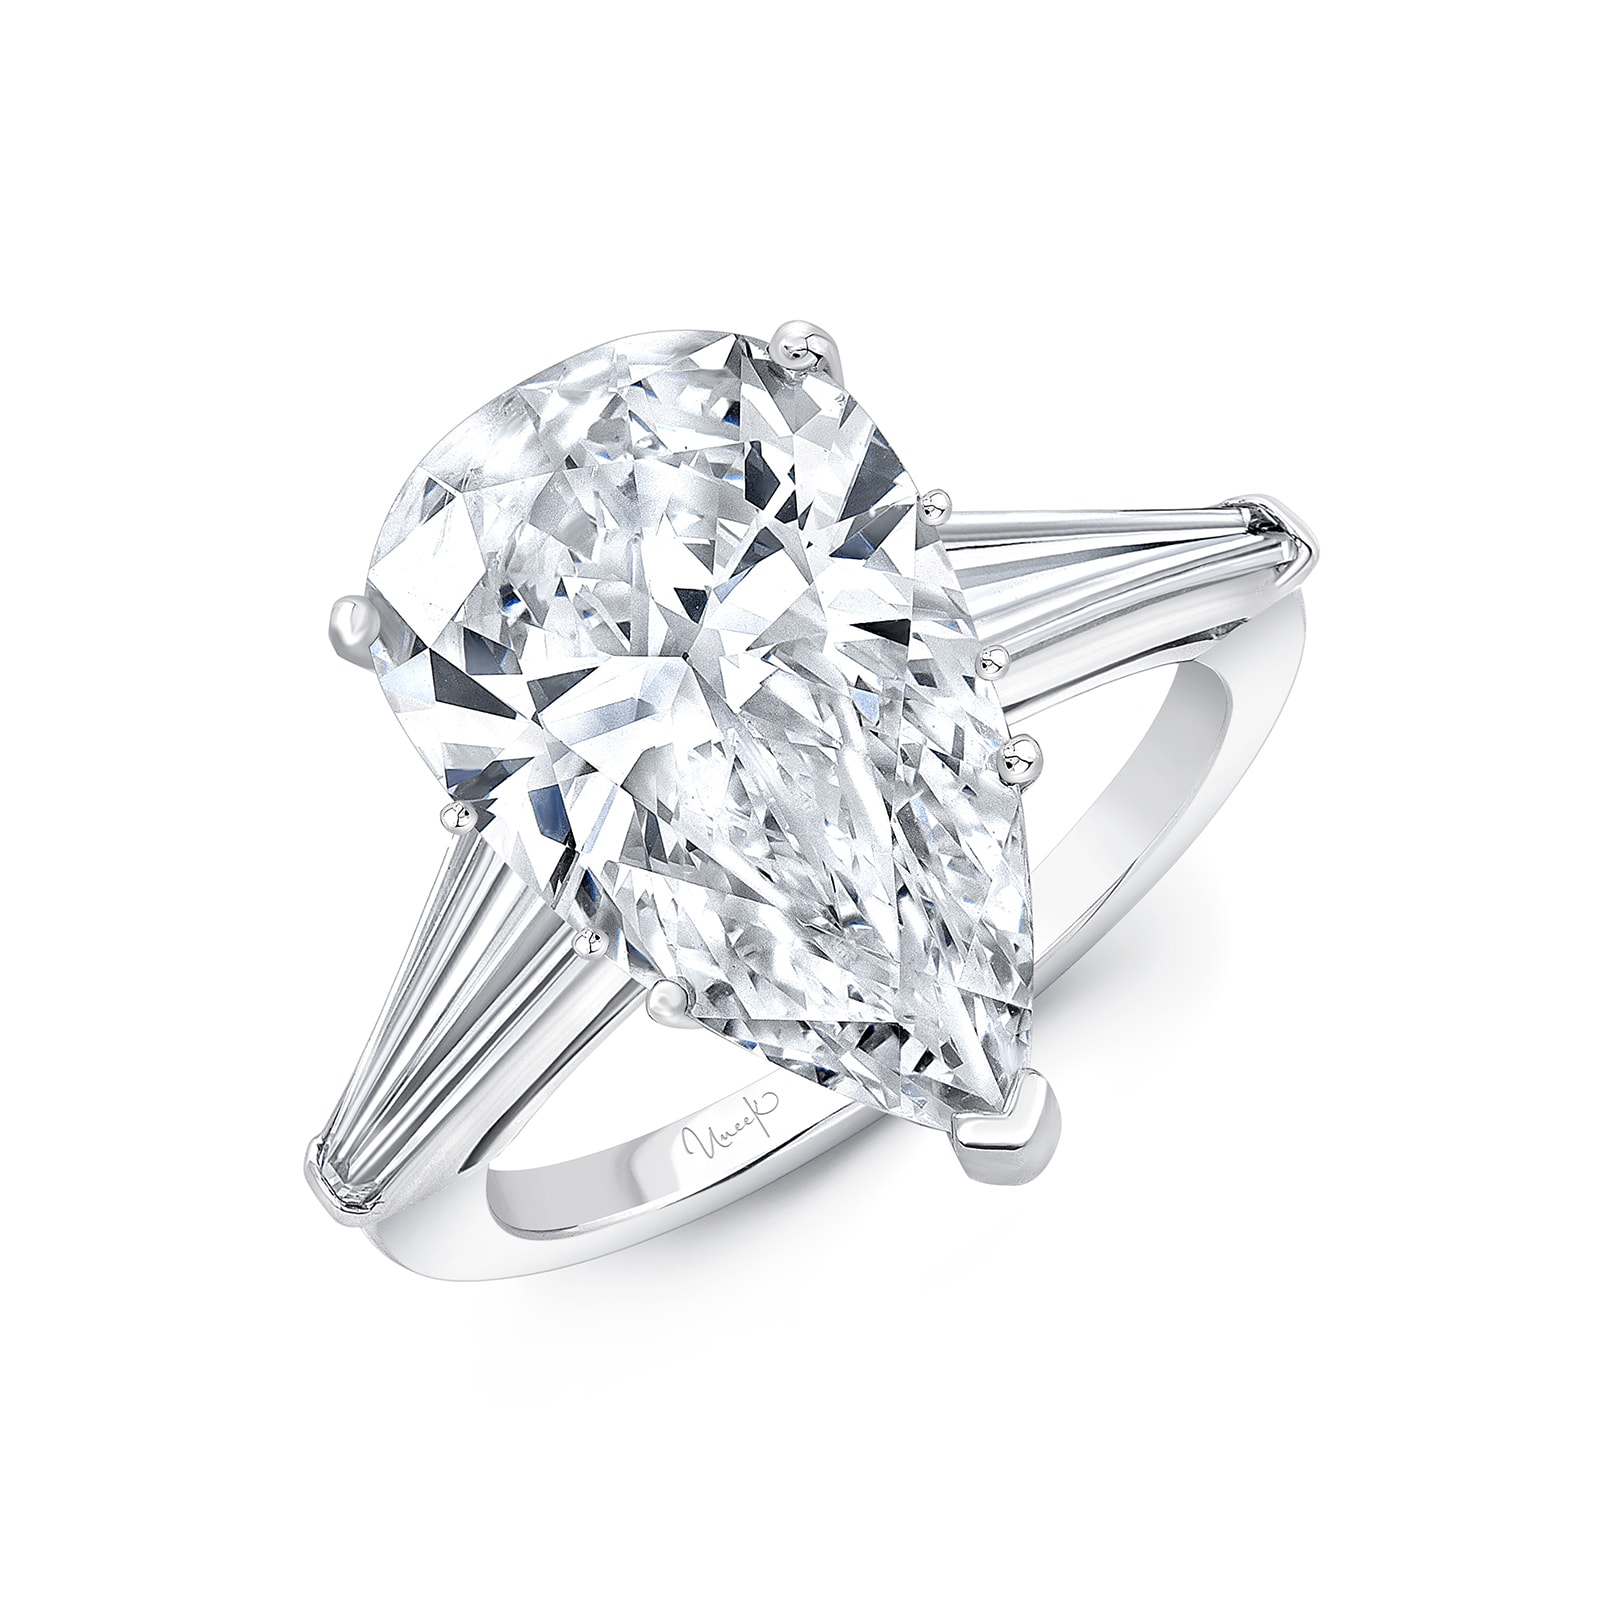 Platinum 5.01cttw Pear And 0.60cttw Baguette Shoulders Engagement Ring